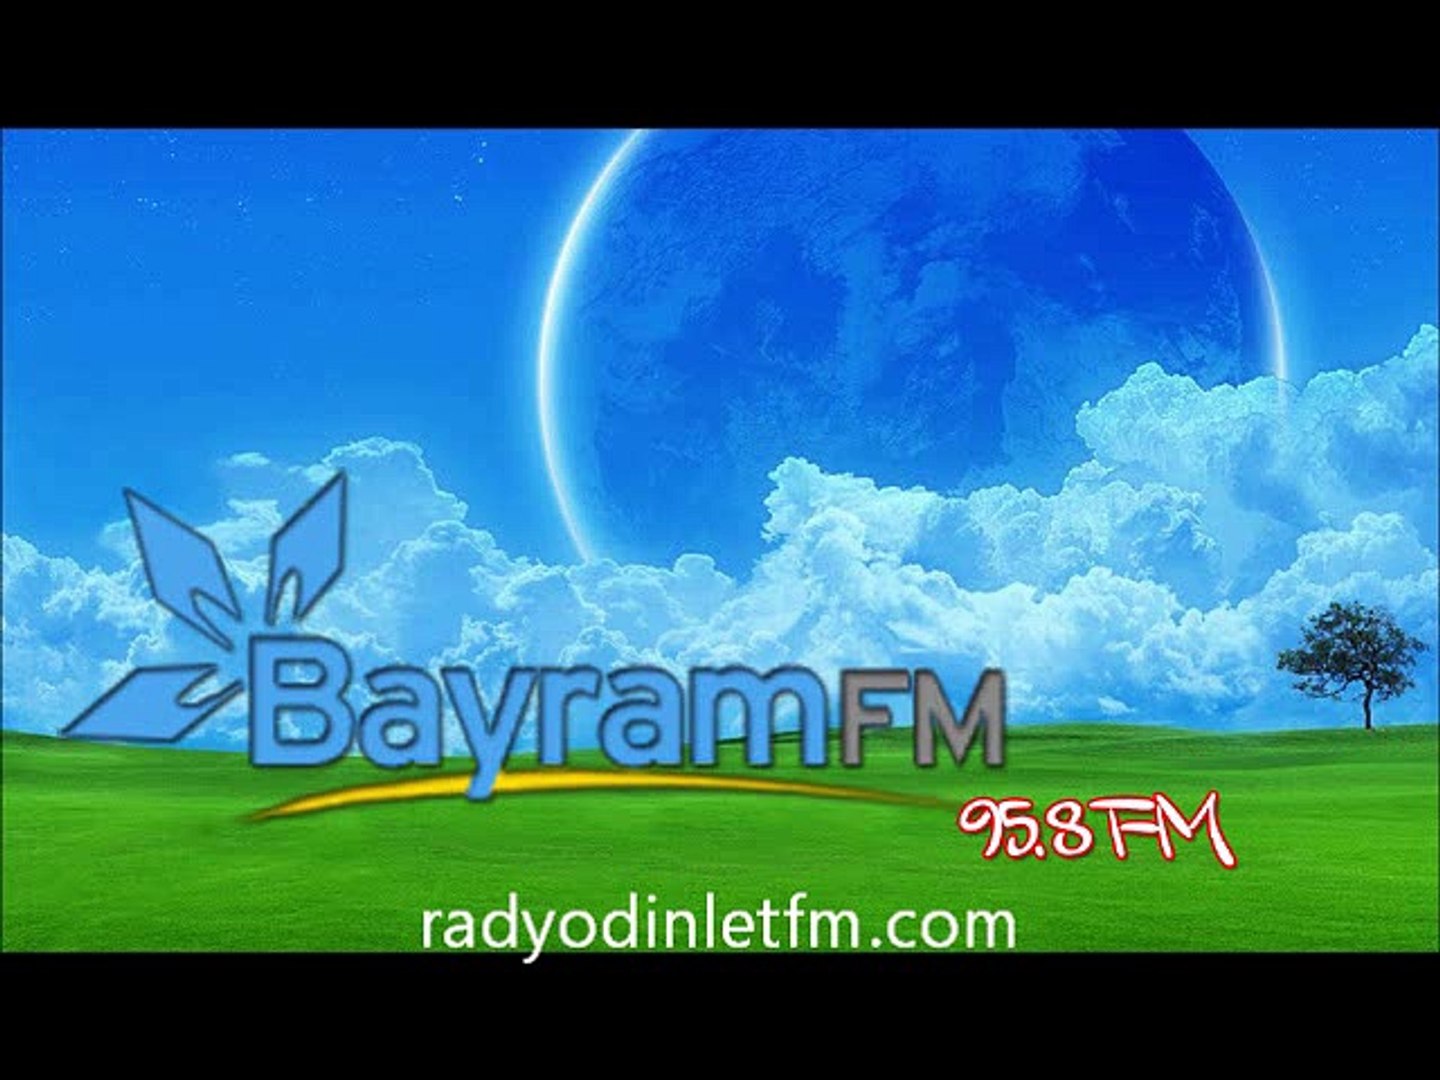 Radyo Bayram Fm - Dailymotion Video